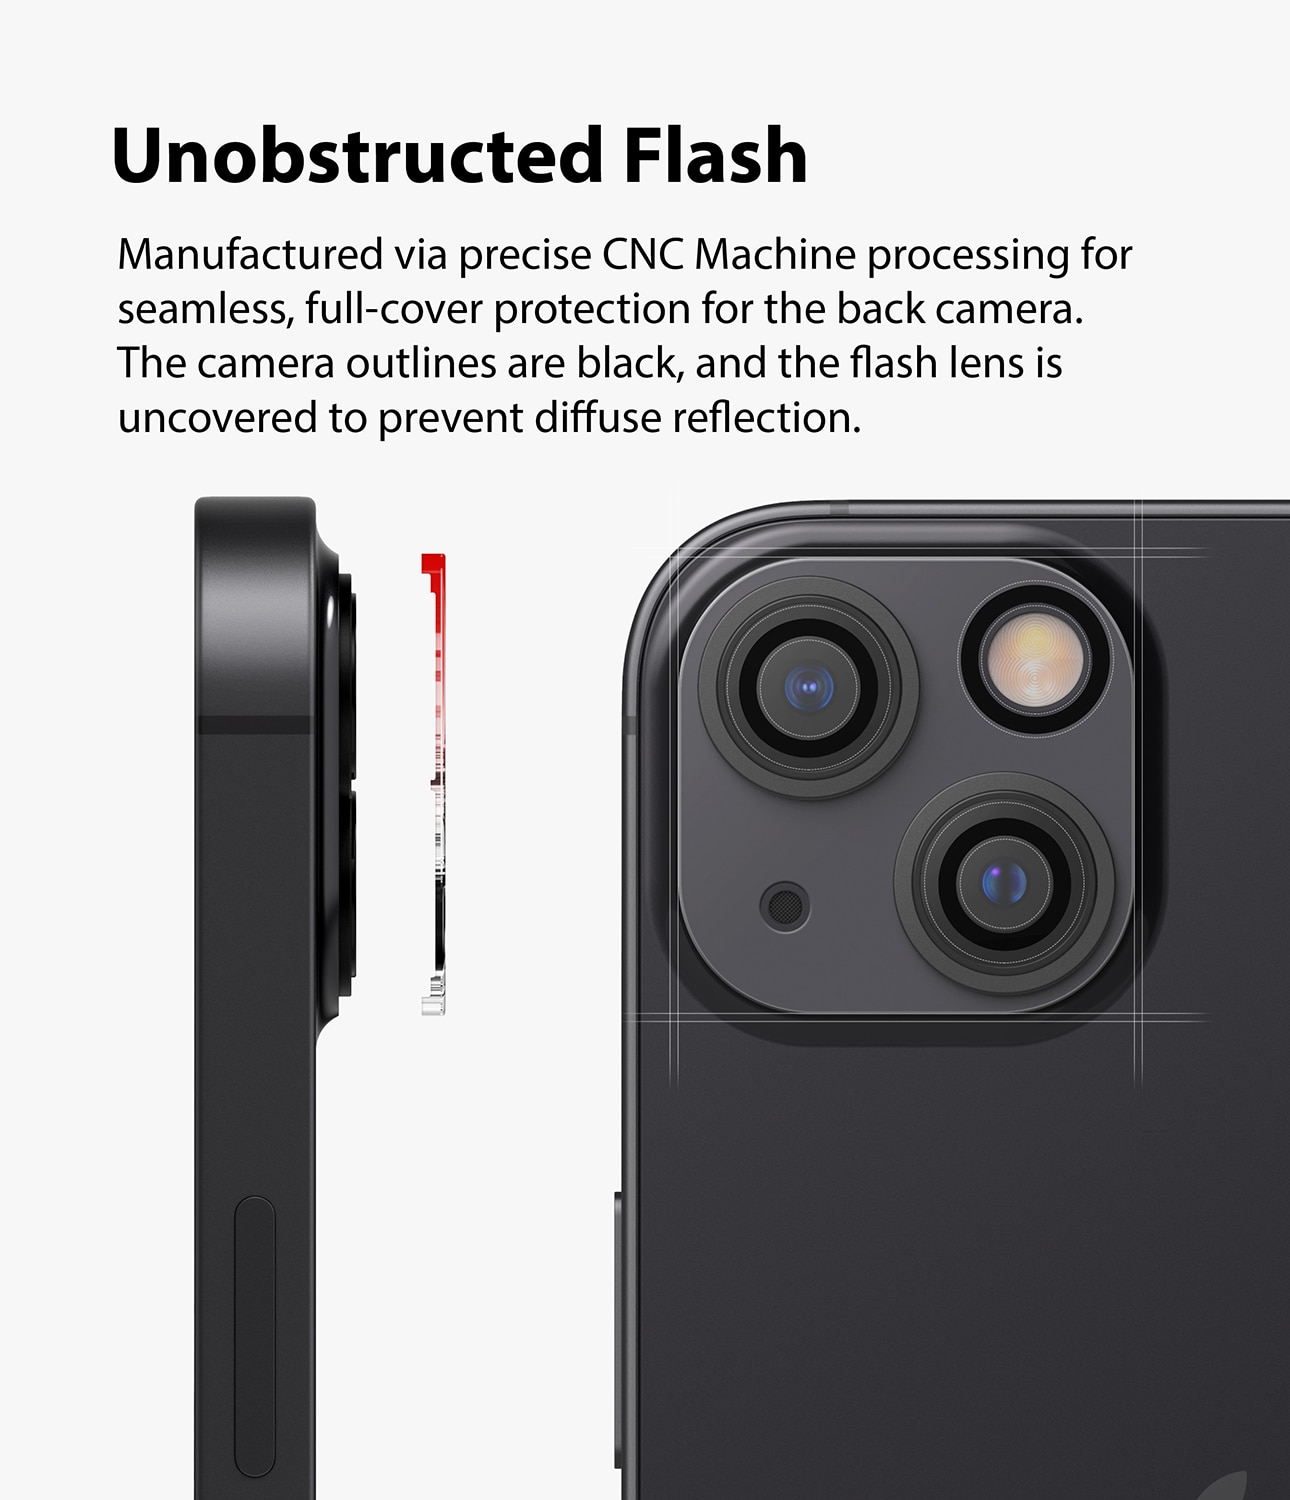 Camera Protector Glass iPhone 13 Mini (2-pack)